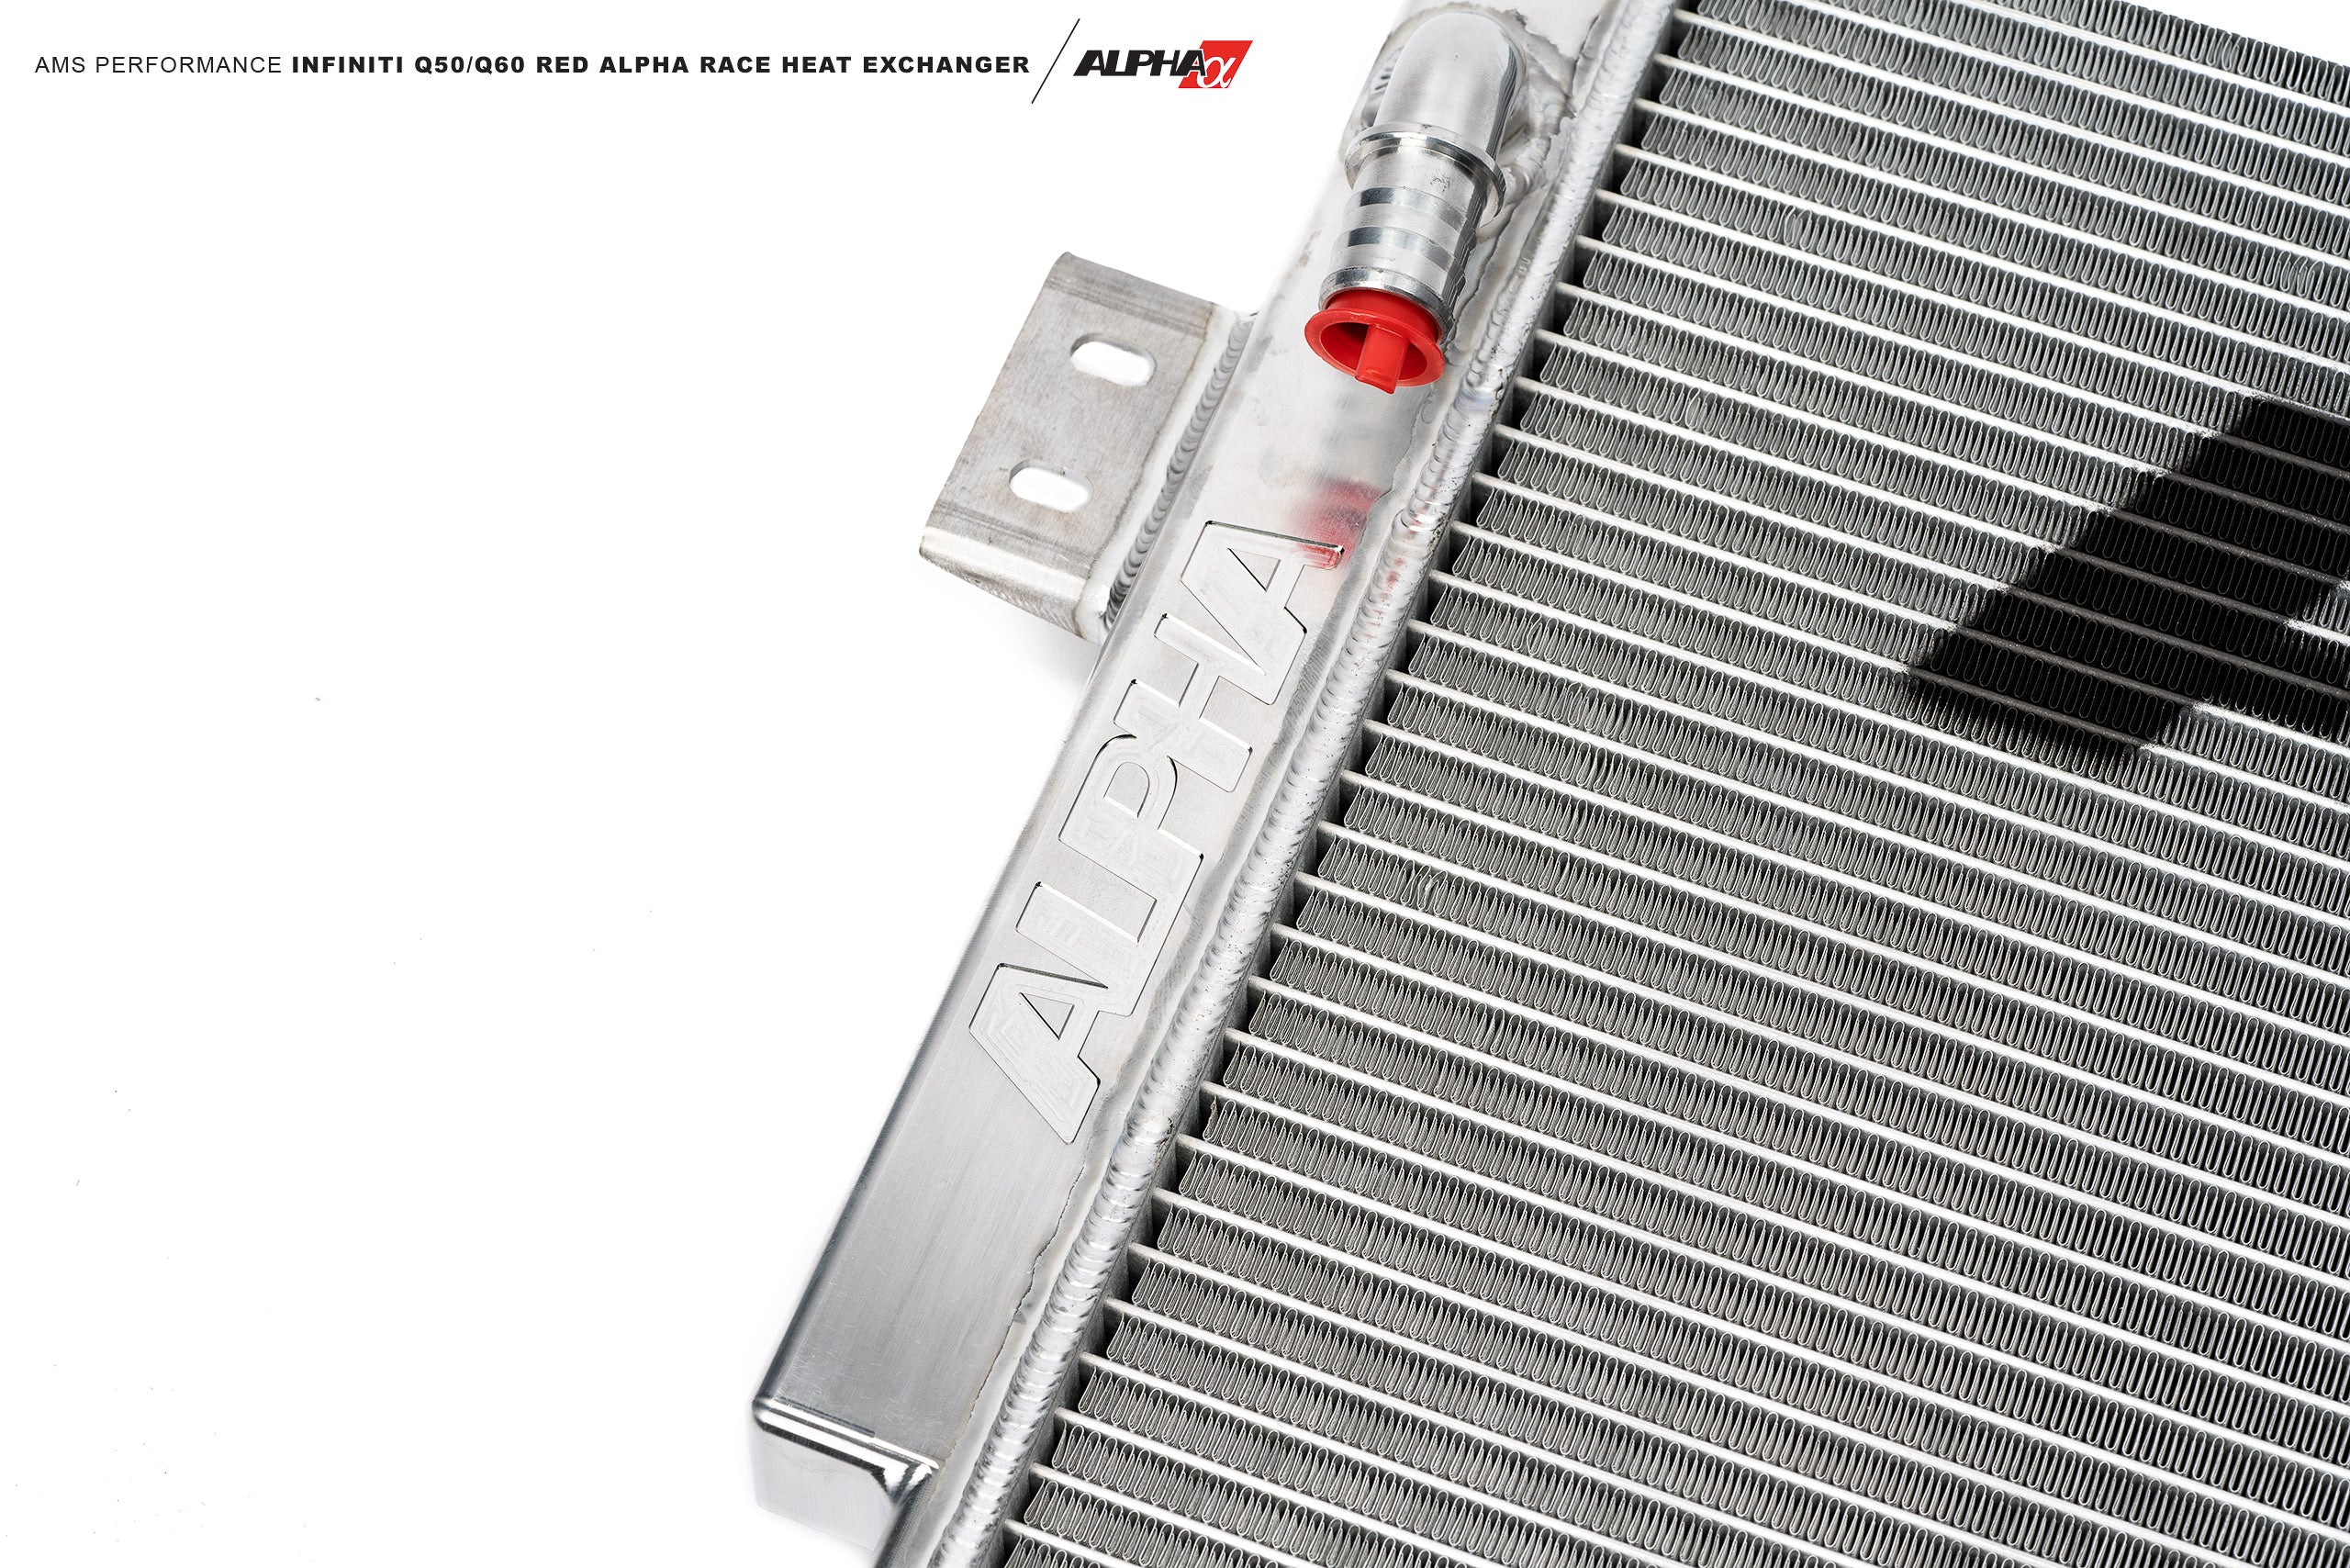 AMS Performance Q50/Q60 Red Alpha Race Heat Exchanger